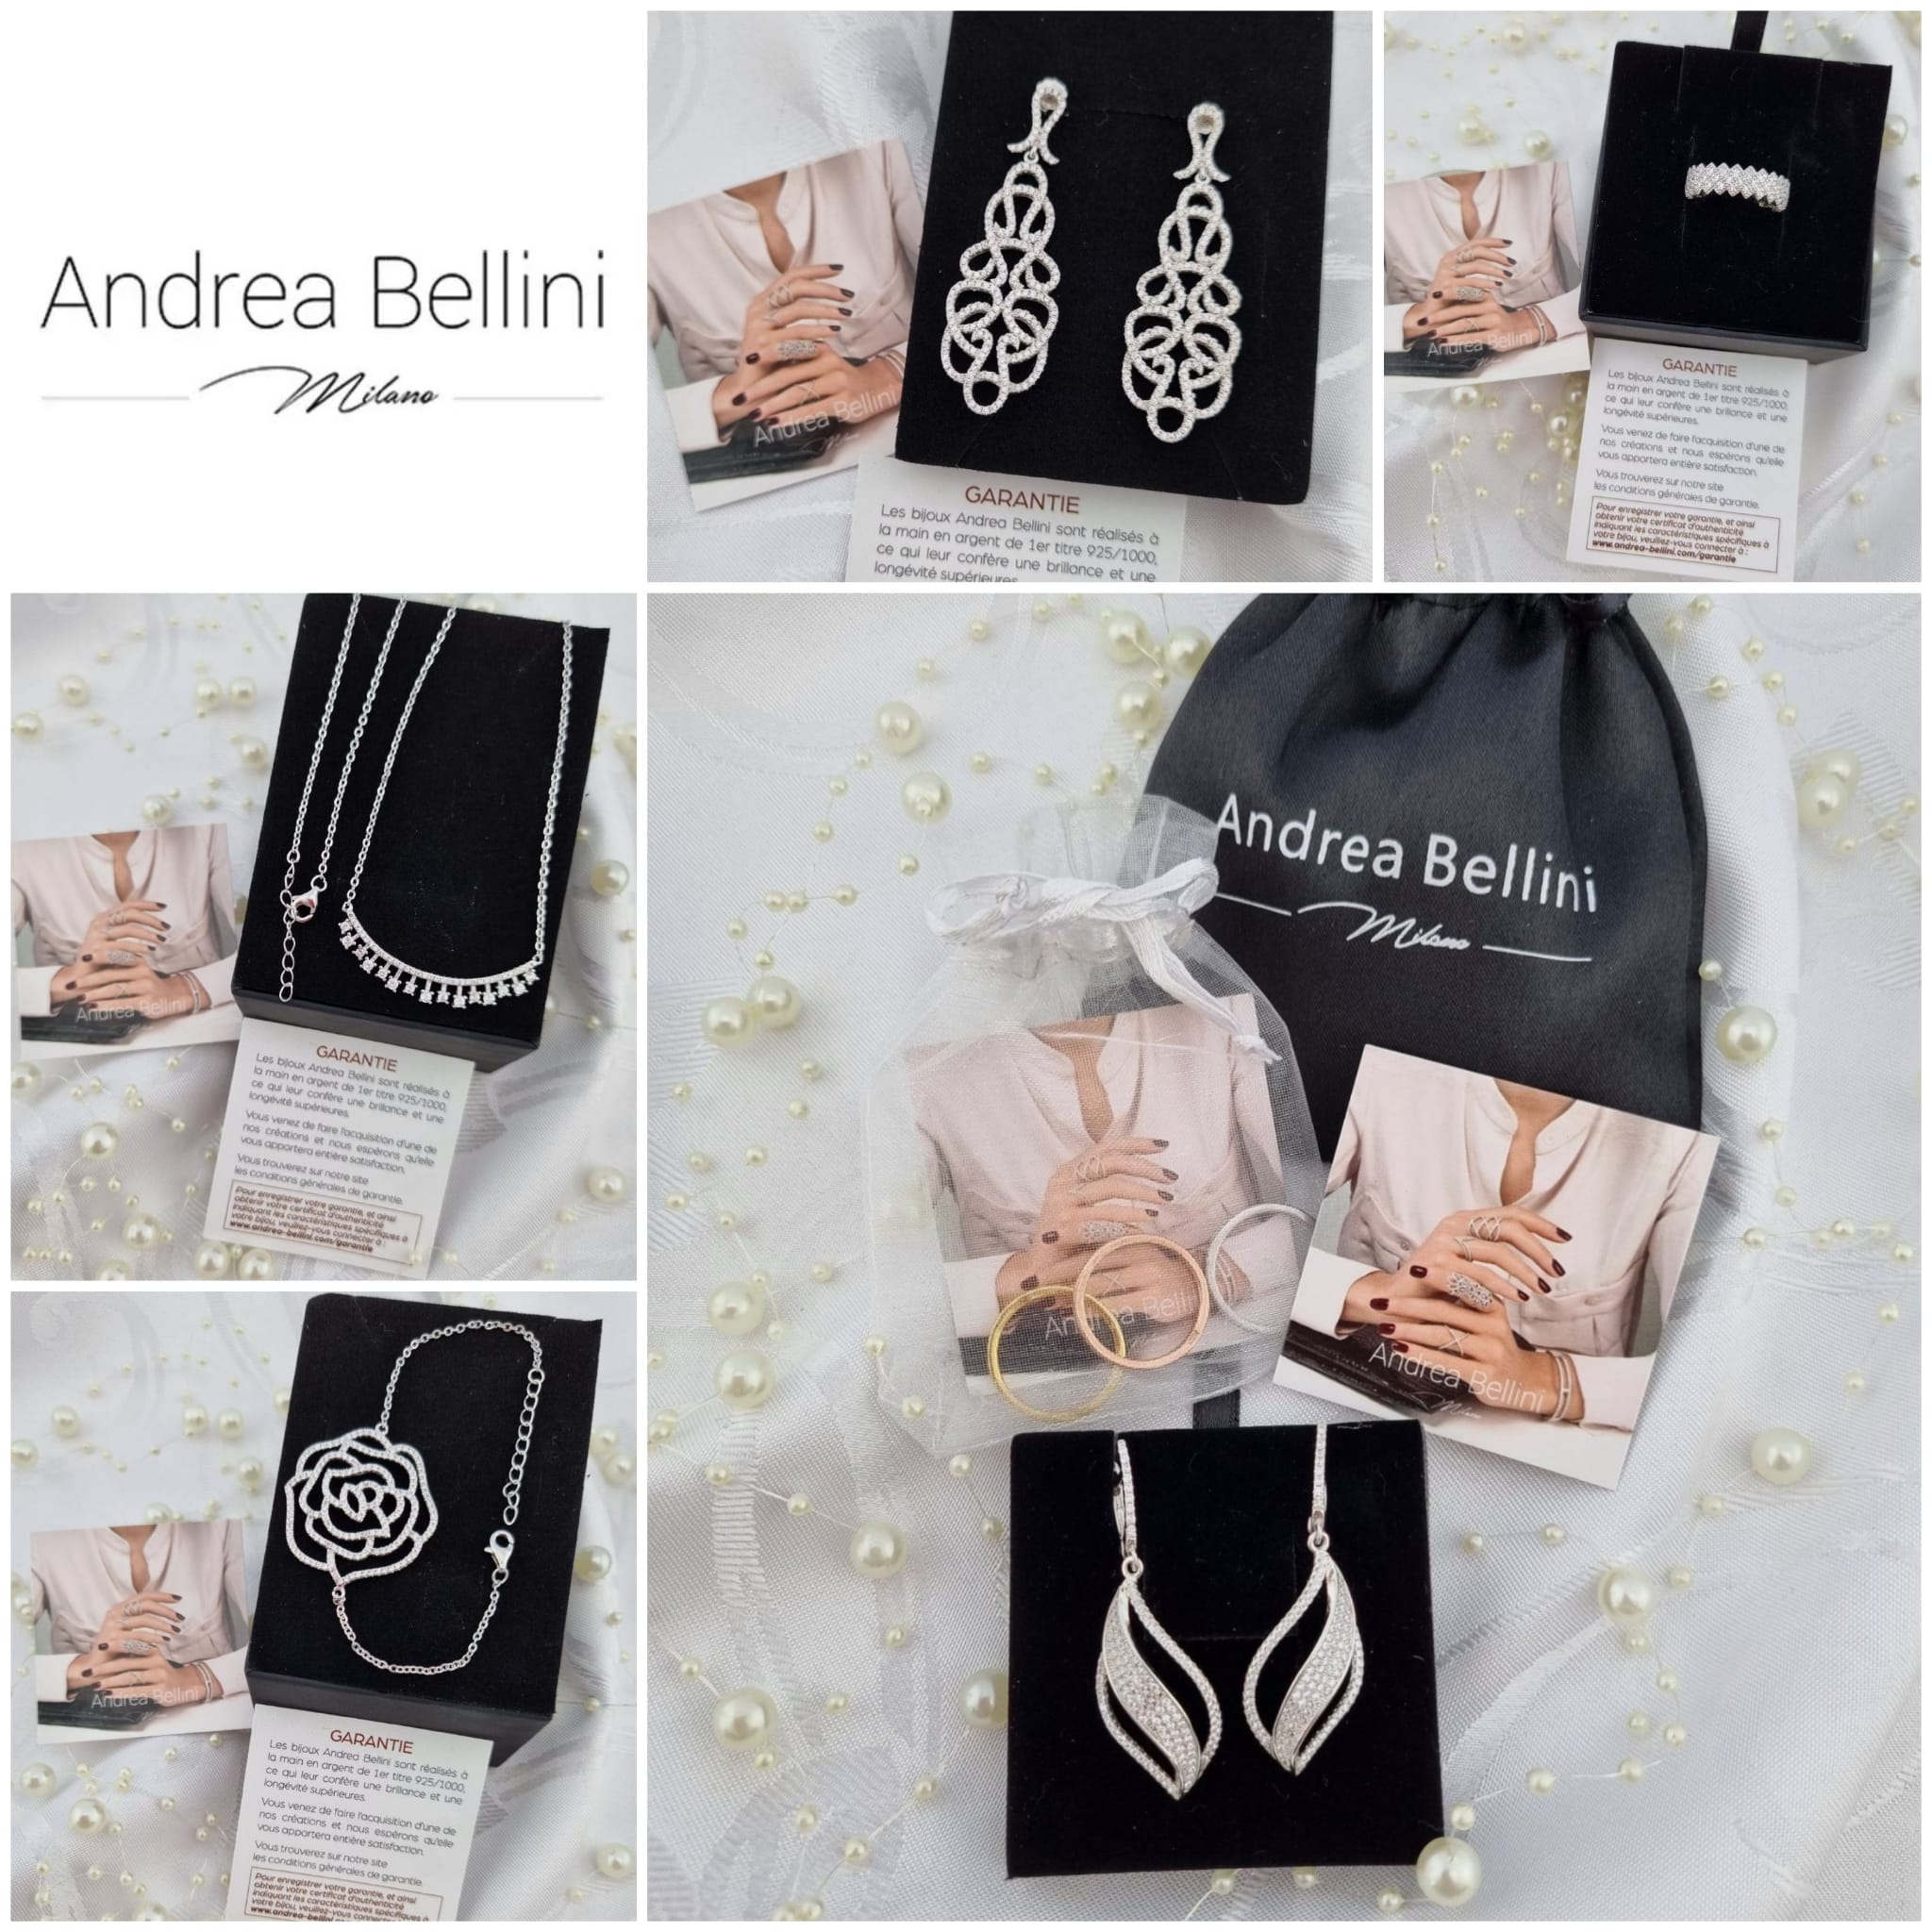 Bijoux italiens Andrea Bellini Milano